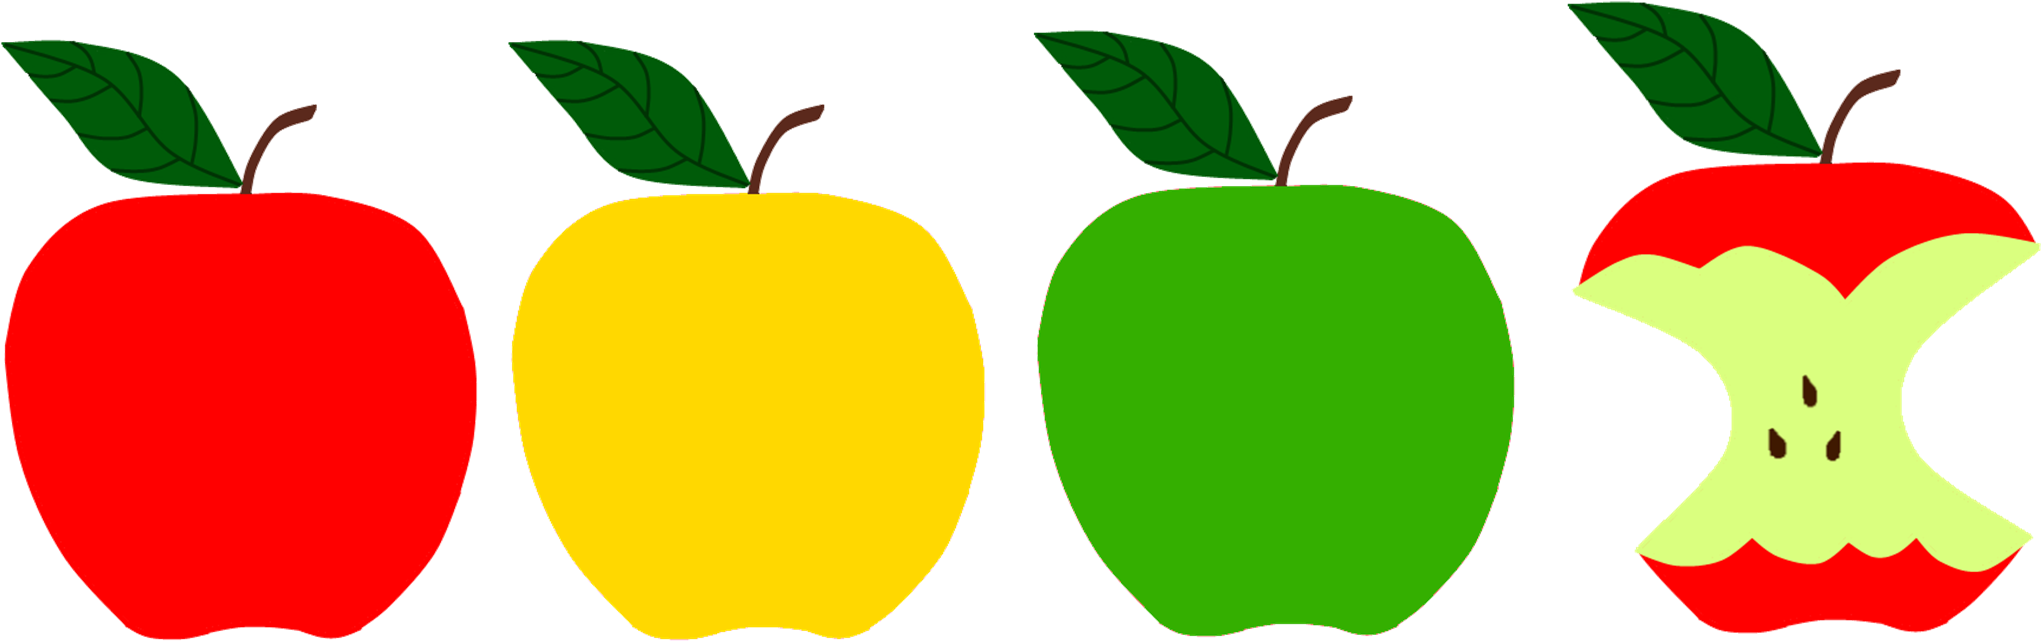 Apples Sunflower Storytime - Red Apple Green Apple Yellow Apple (2080x668)